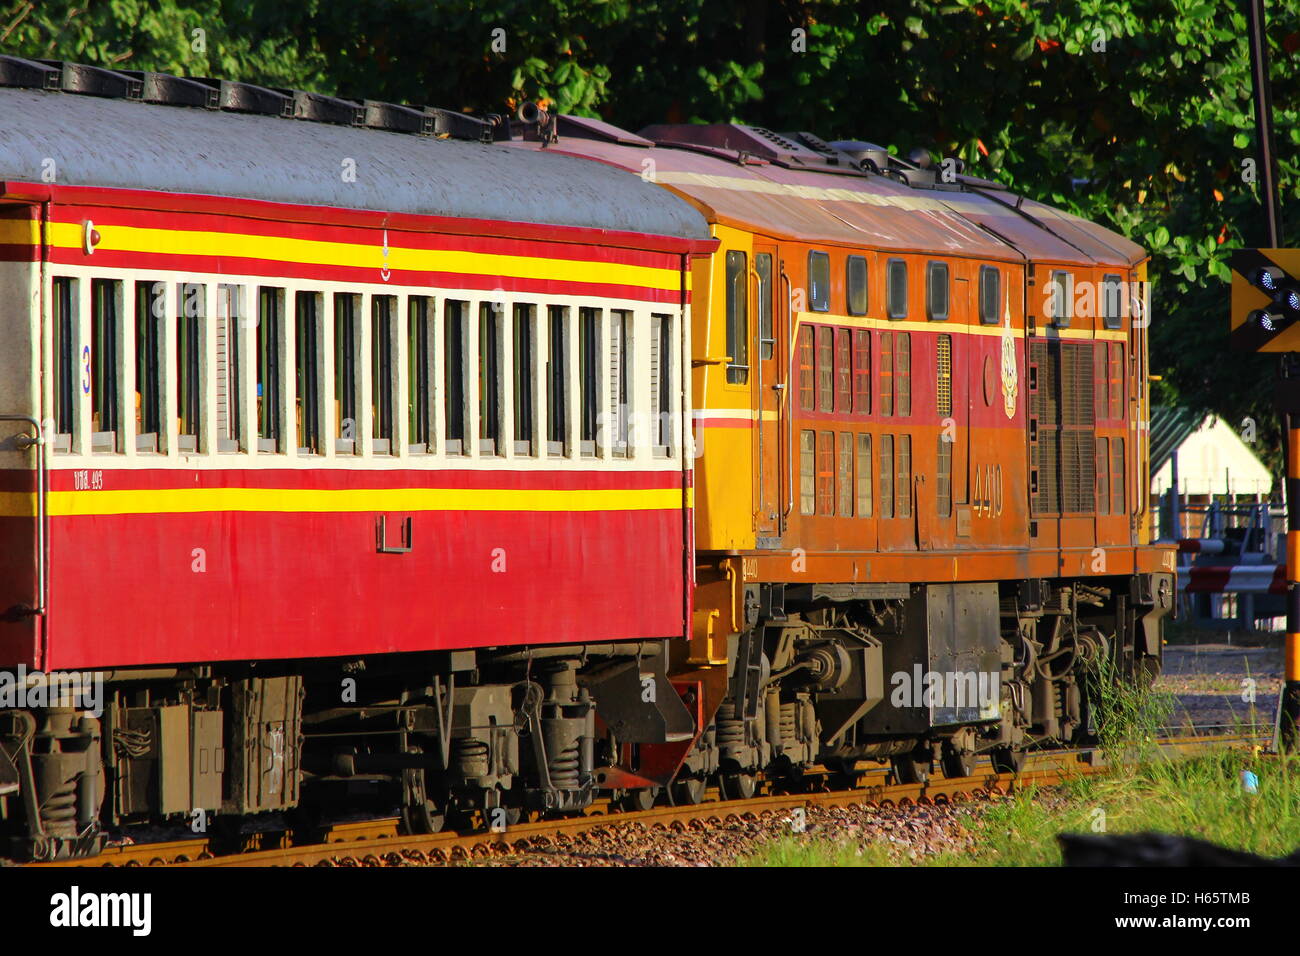 Alsthom Lokomotive und Zug Nr. 14 nach Bangkok. Foto am Bahnhof von Chiang Mai, Thailand. Stockfoto